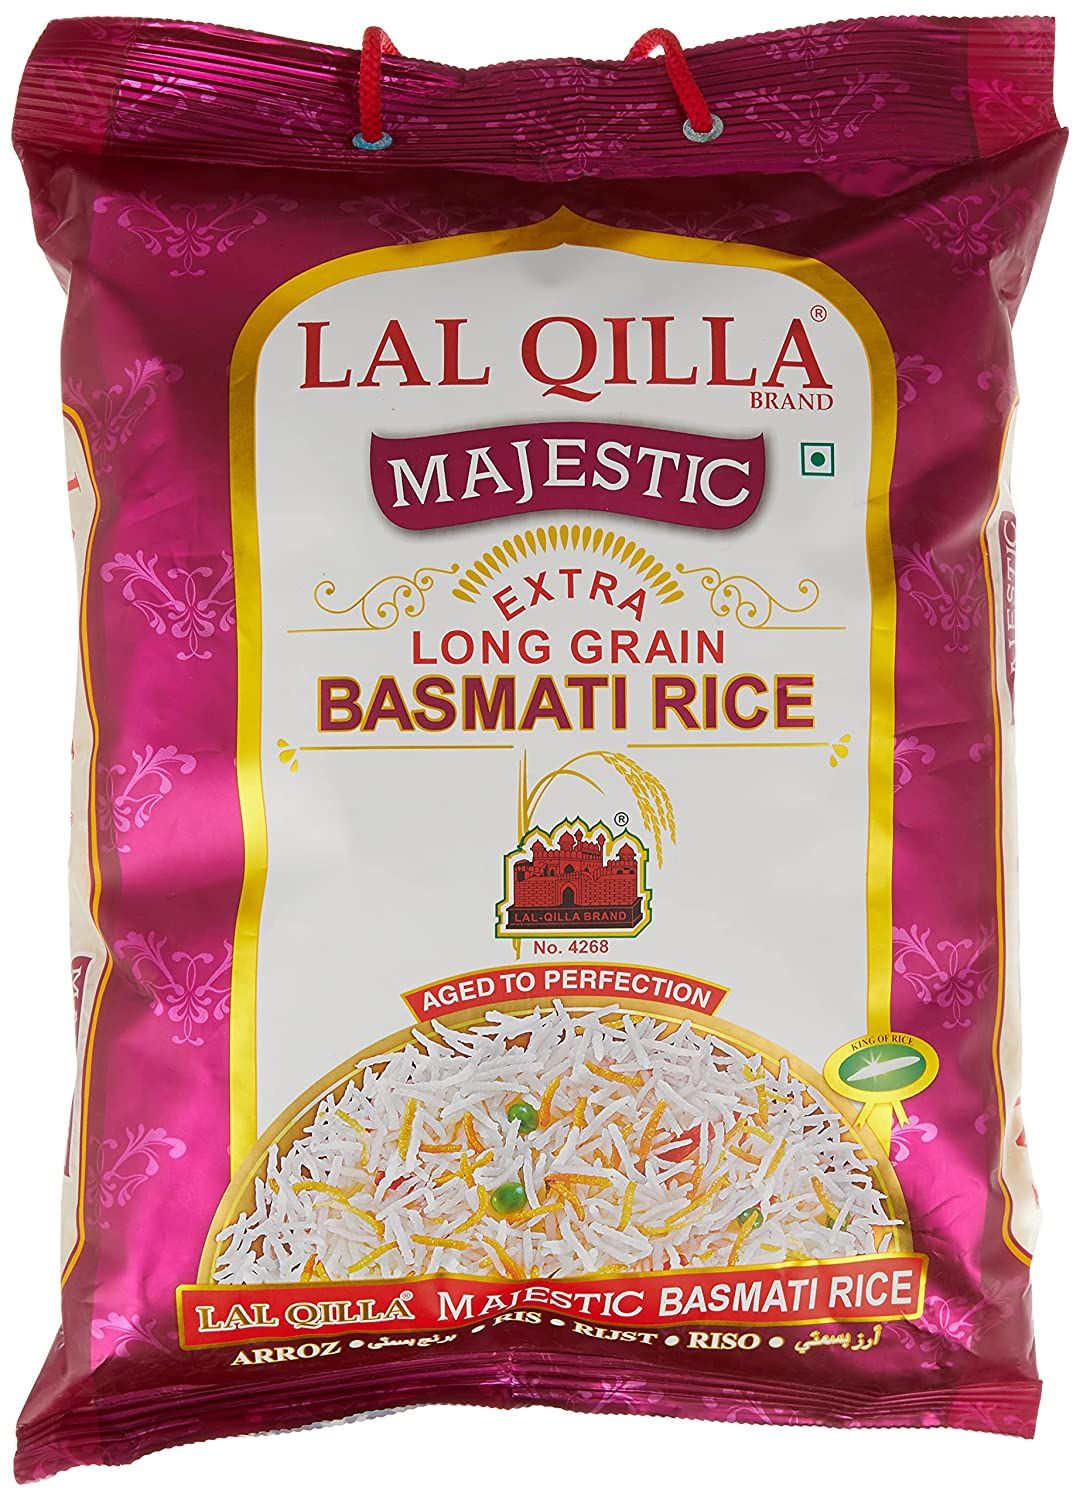 Lal Qilla Majestic Basmati Rice Image